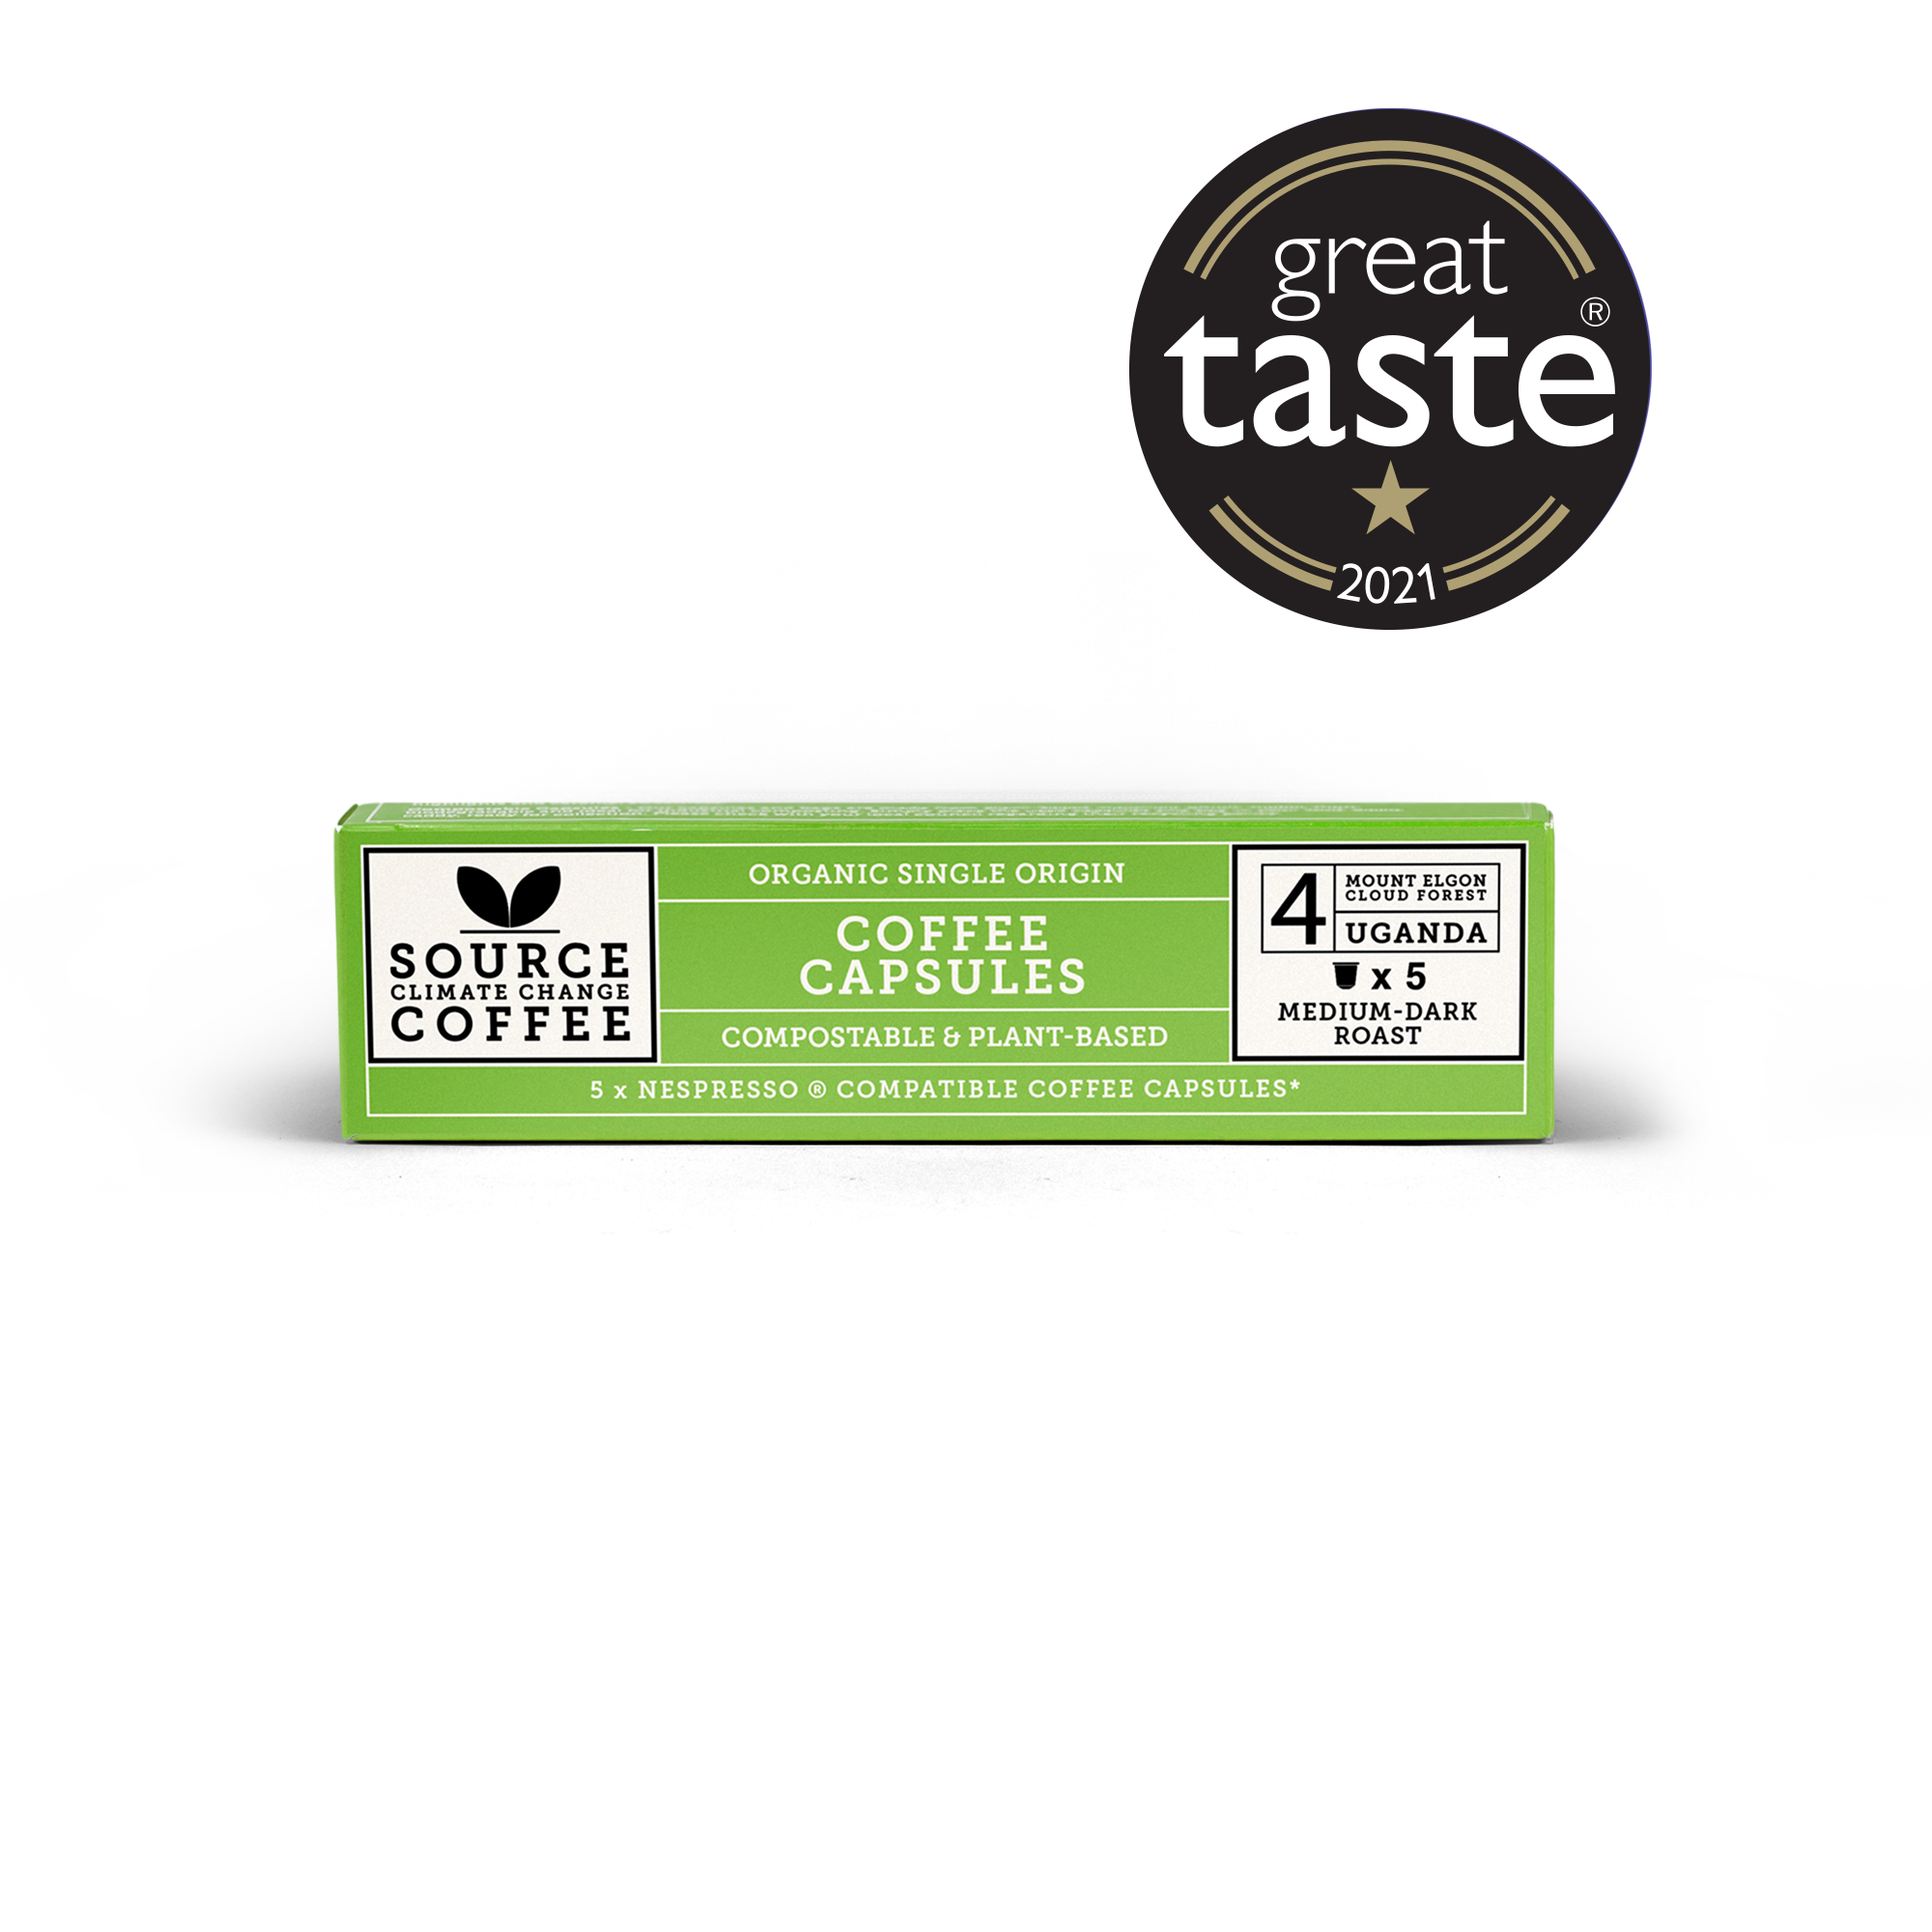 25 x Organic & Biodegradable Nespresso ® Capsules - Taste Collection